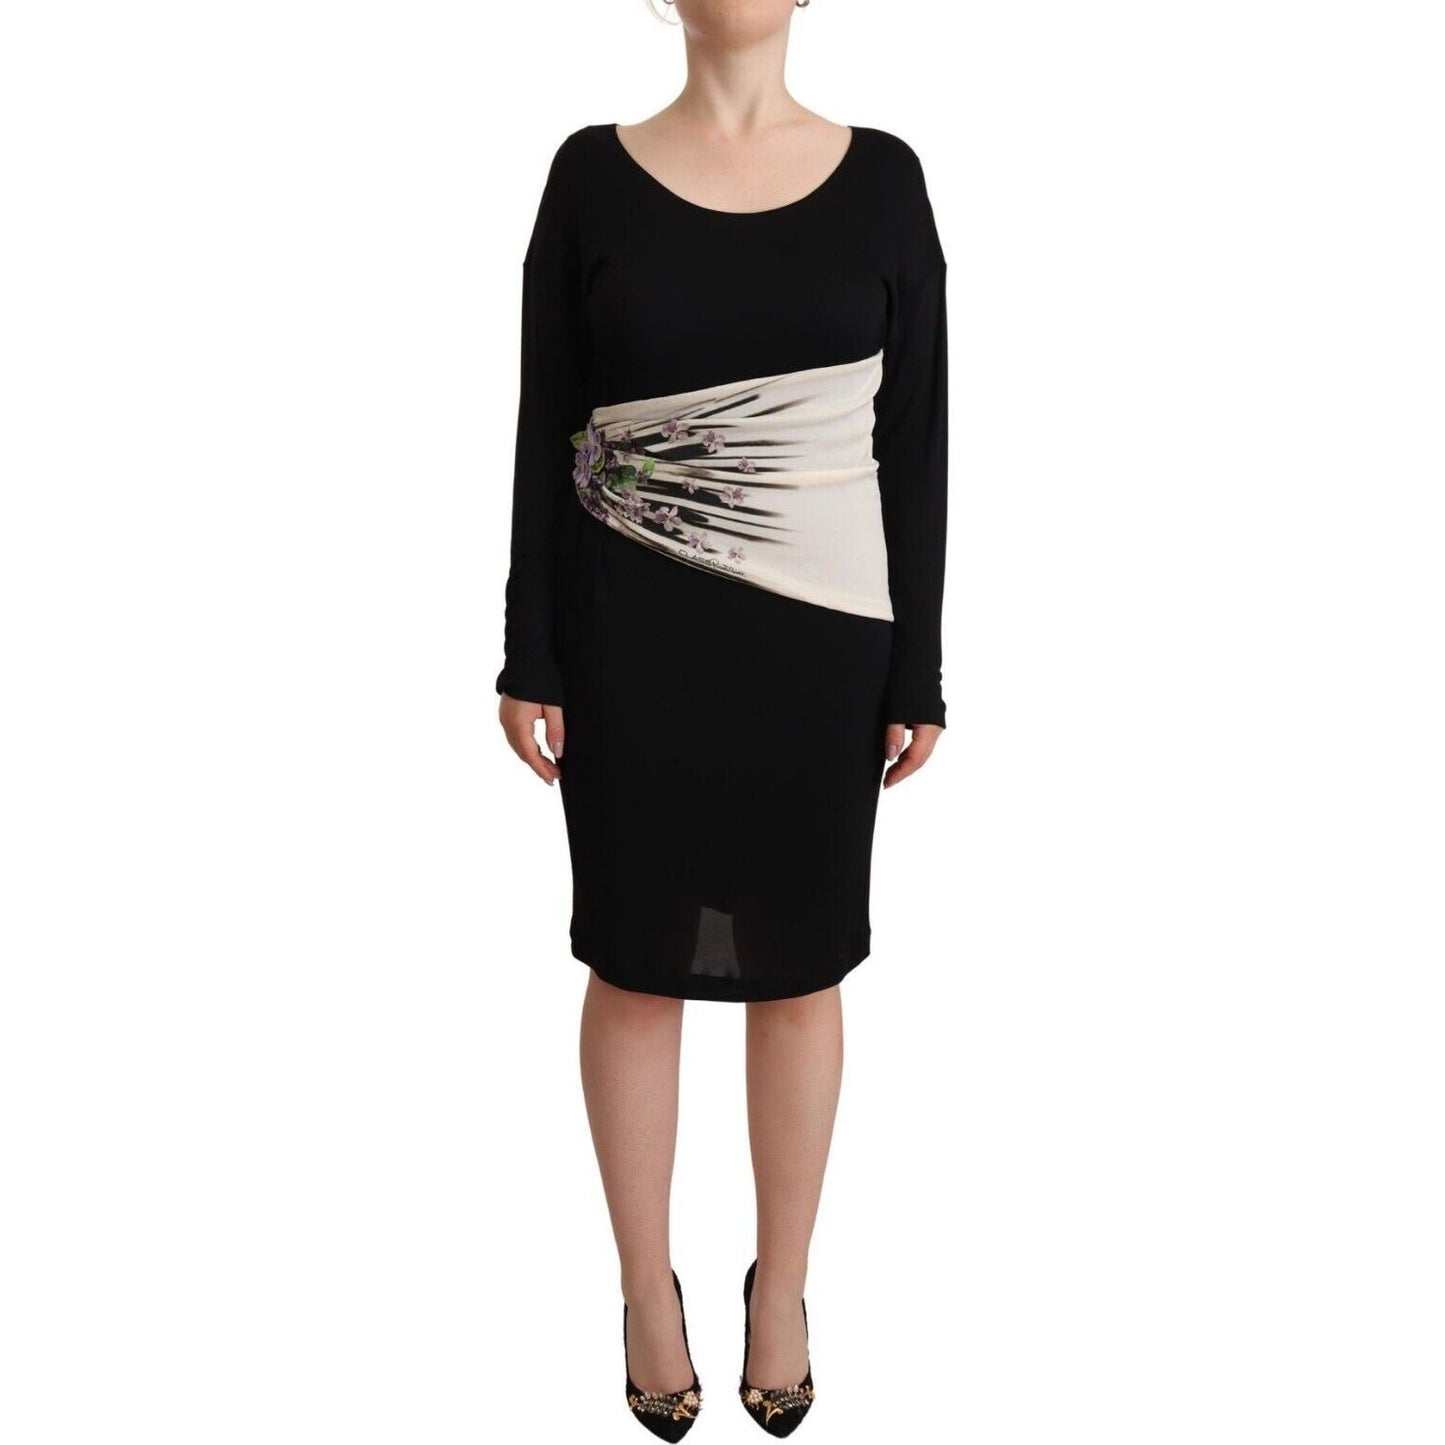 Roberto Cavalli Elegant Sheath Long Sleeve Boat Neck Dress black-silver-sheath-knee-length-dress WOMAN DRESSES s-l1600-100-124ef020-e23.jpg